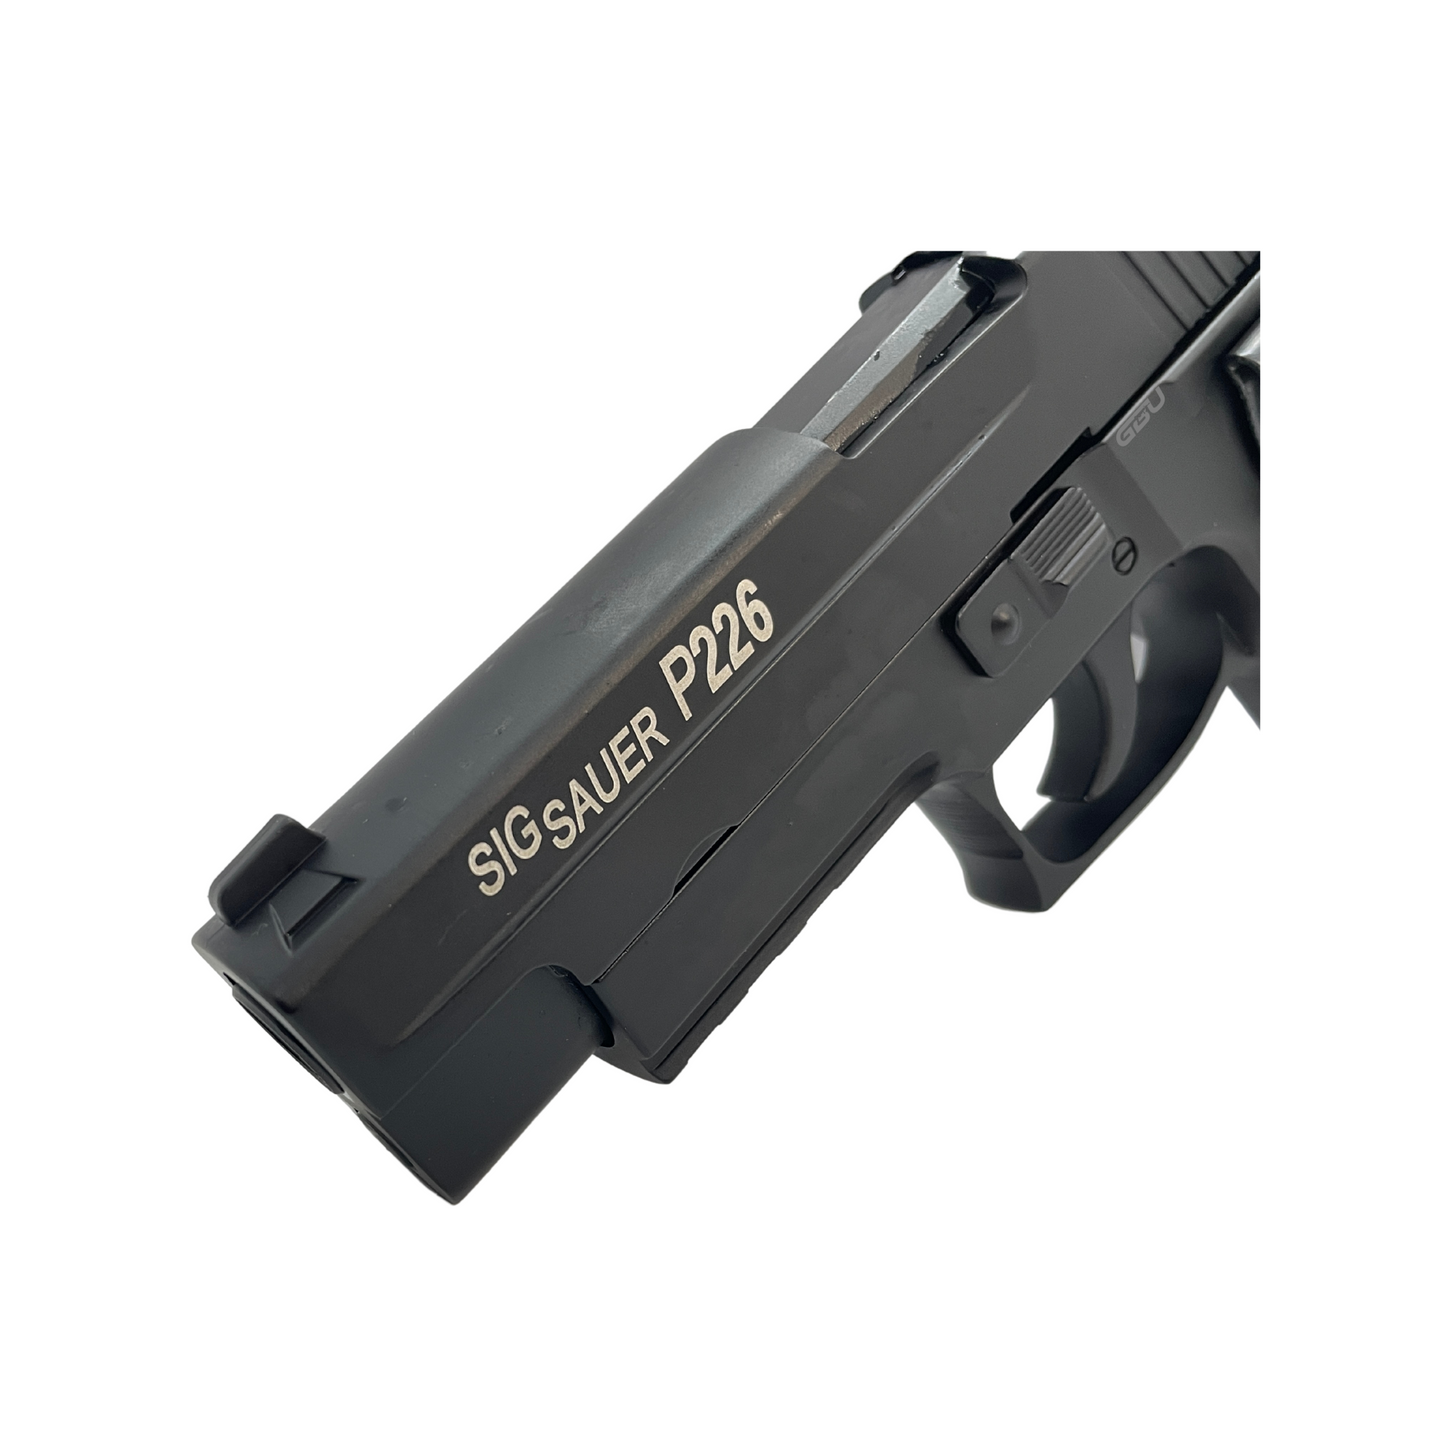 P226 SIG SAUER Double Bell Metal Green Gas Blowback Pistol - Gel Blaster